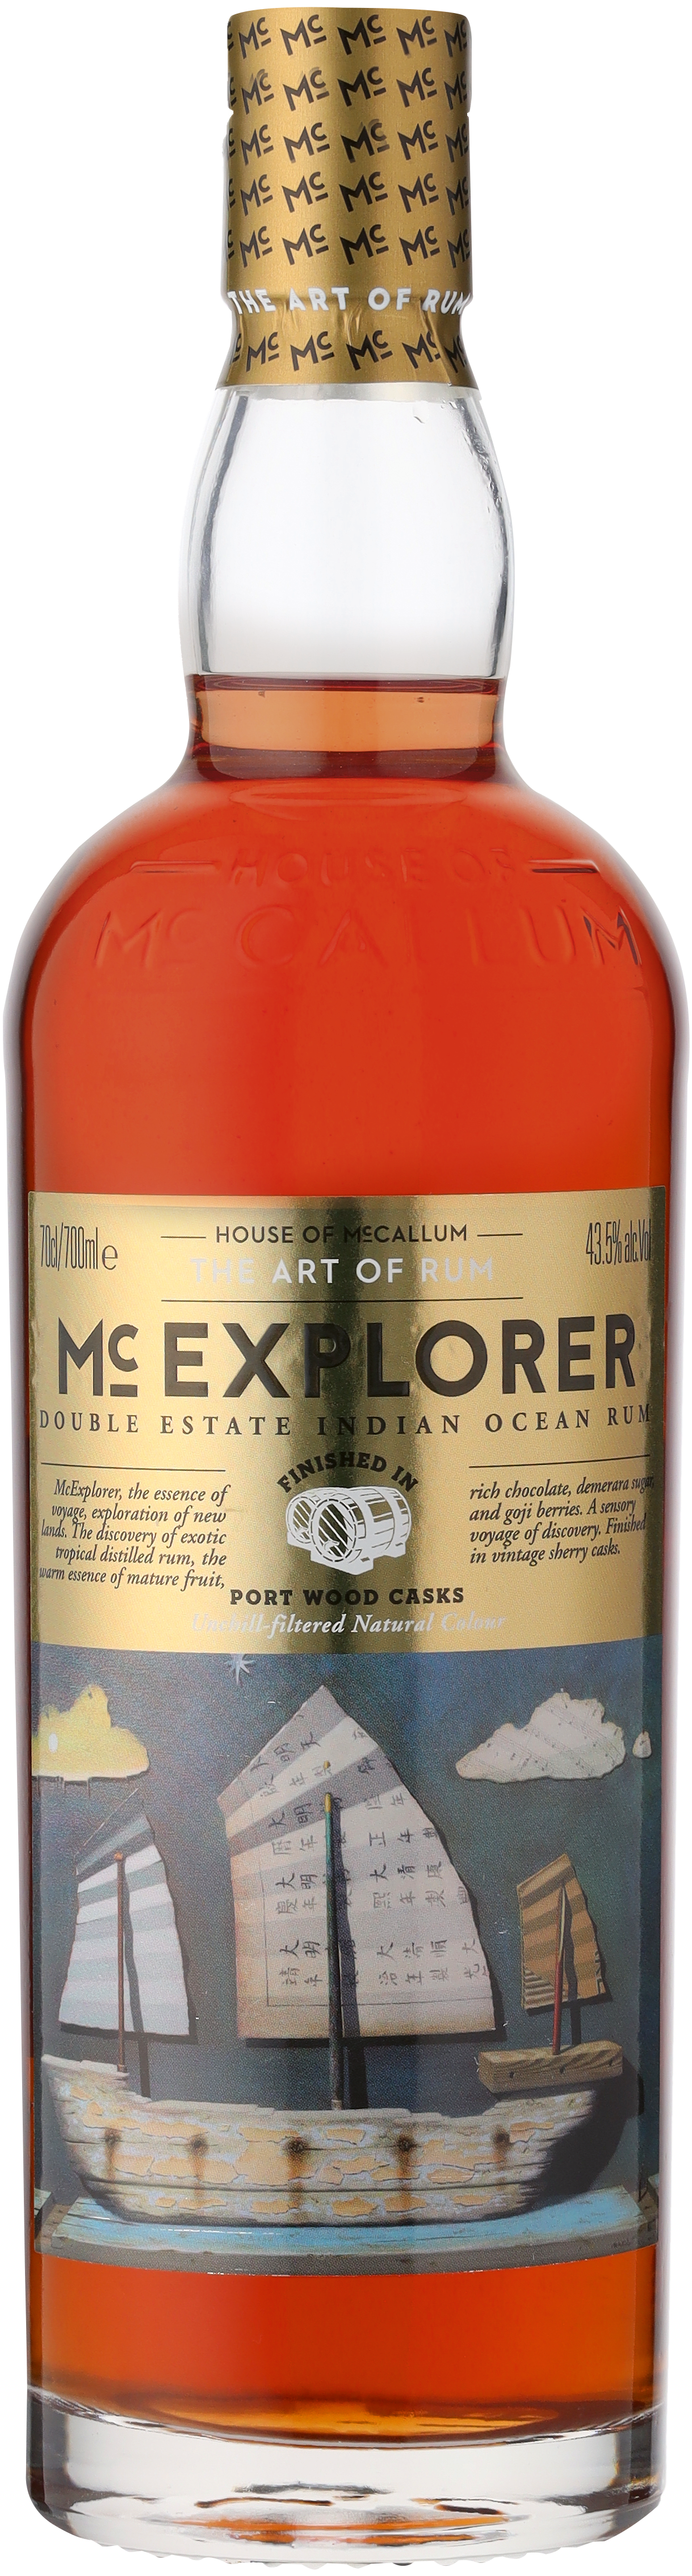 McExplorer Double Estate Indian Ocean Port Cask Finish Rum